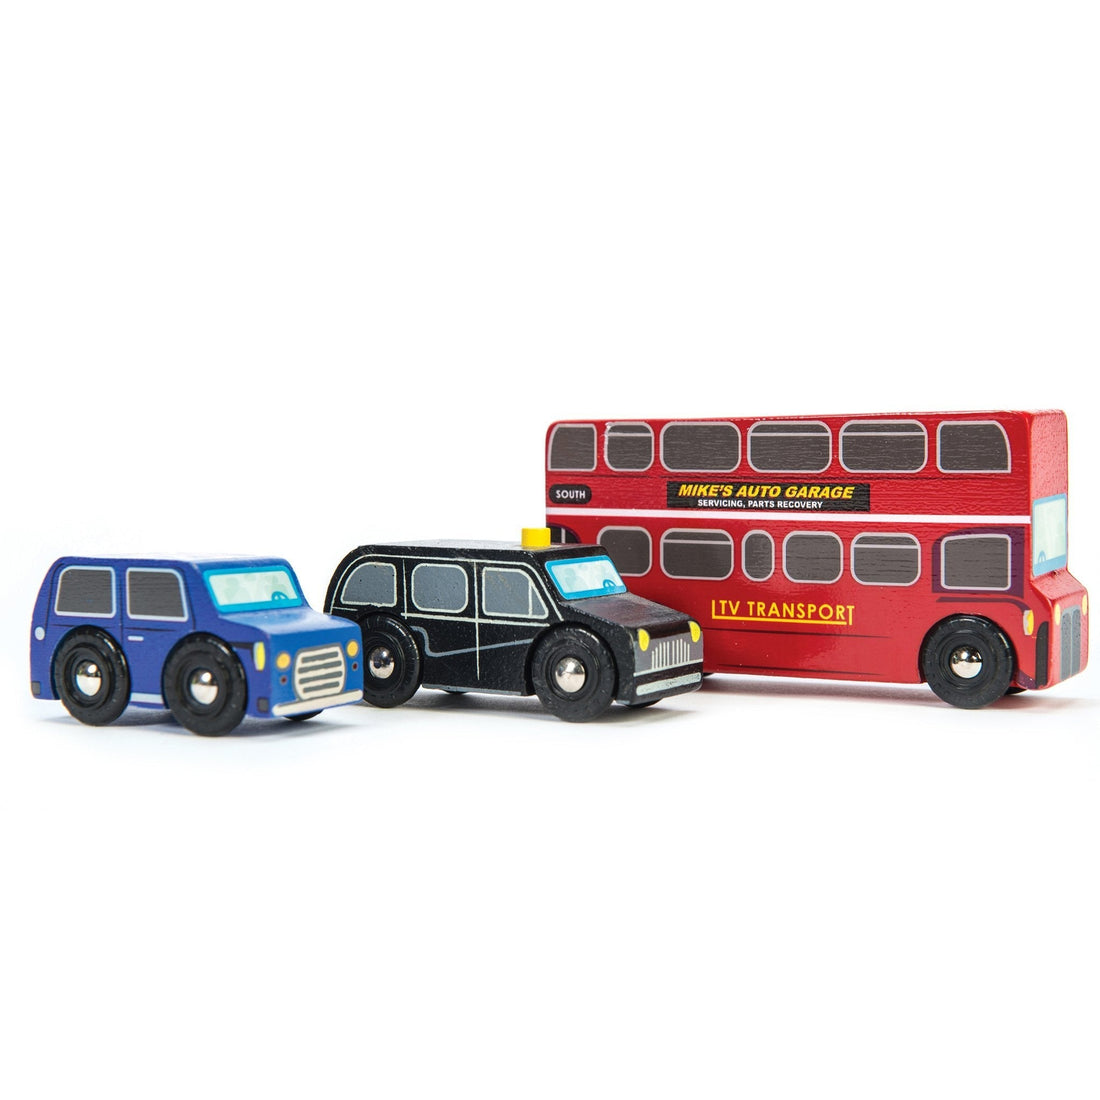 London vehicle set